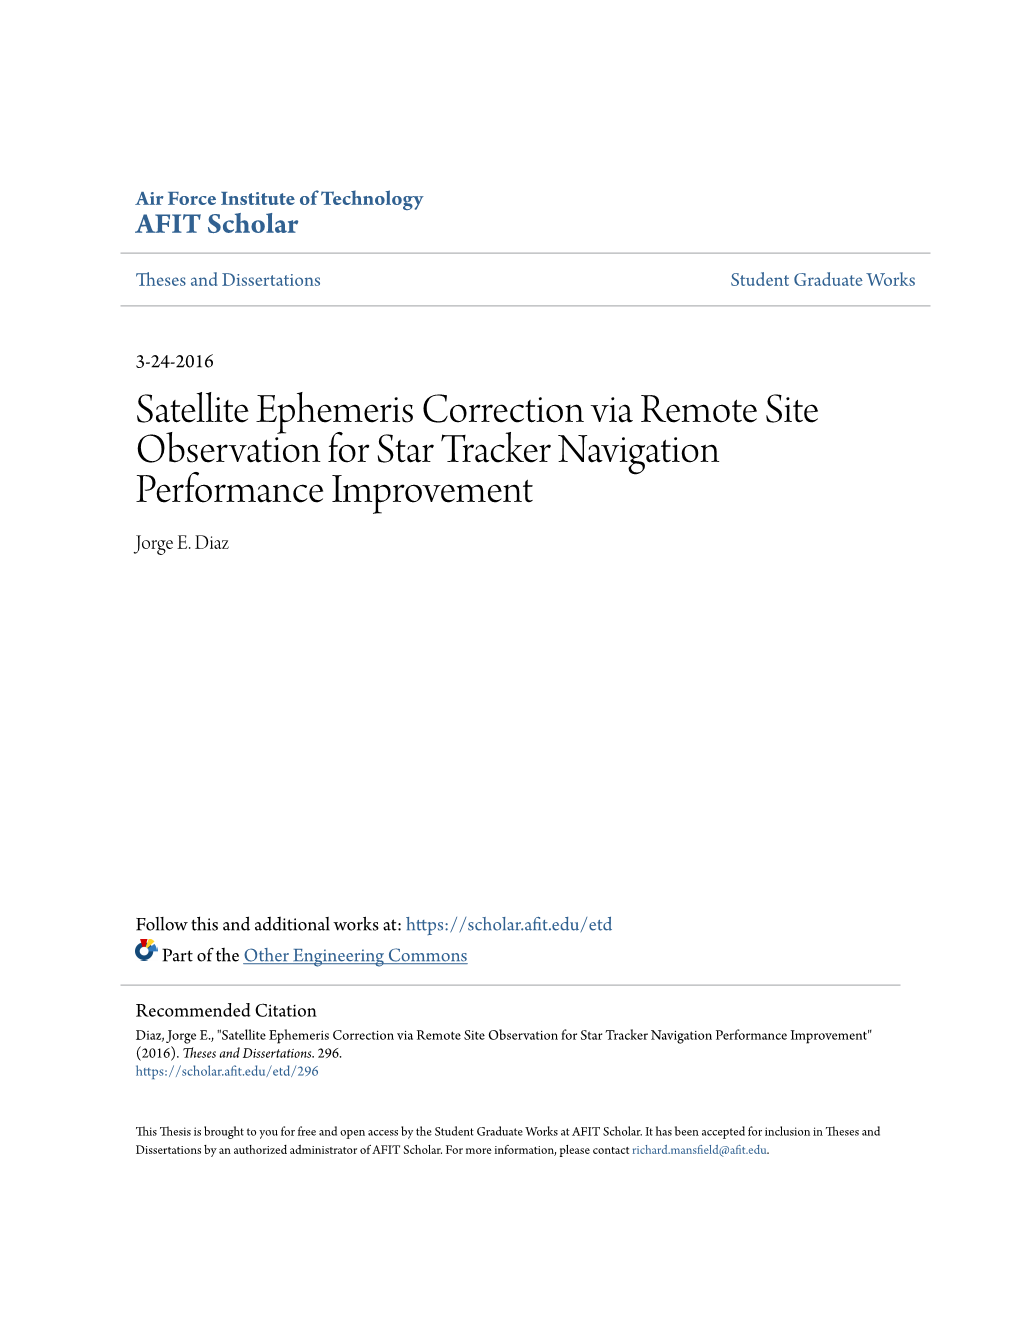 Satellite Ephemeris Correction Via Remote Site Observation for Star Tracker Navigation Performance Improvement Jorge E